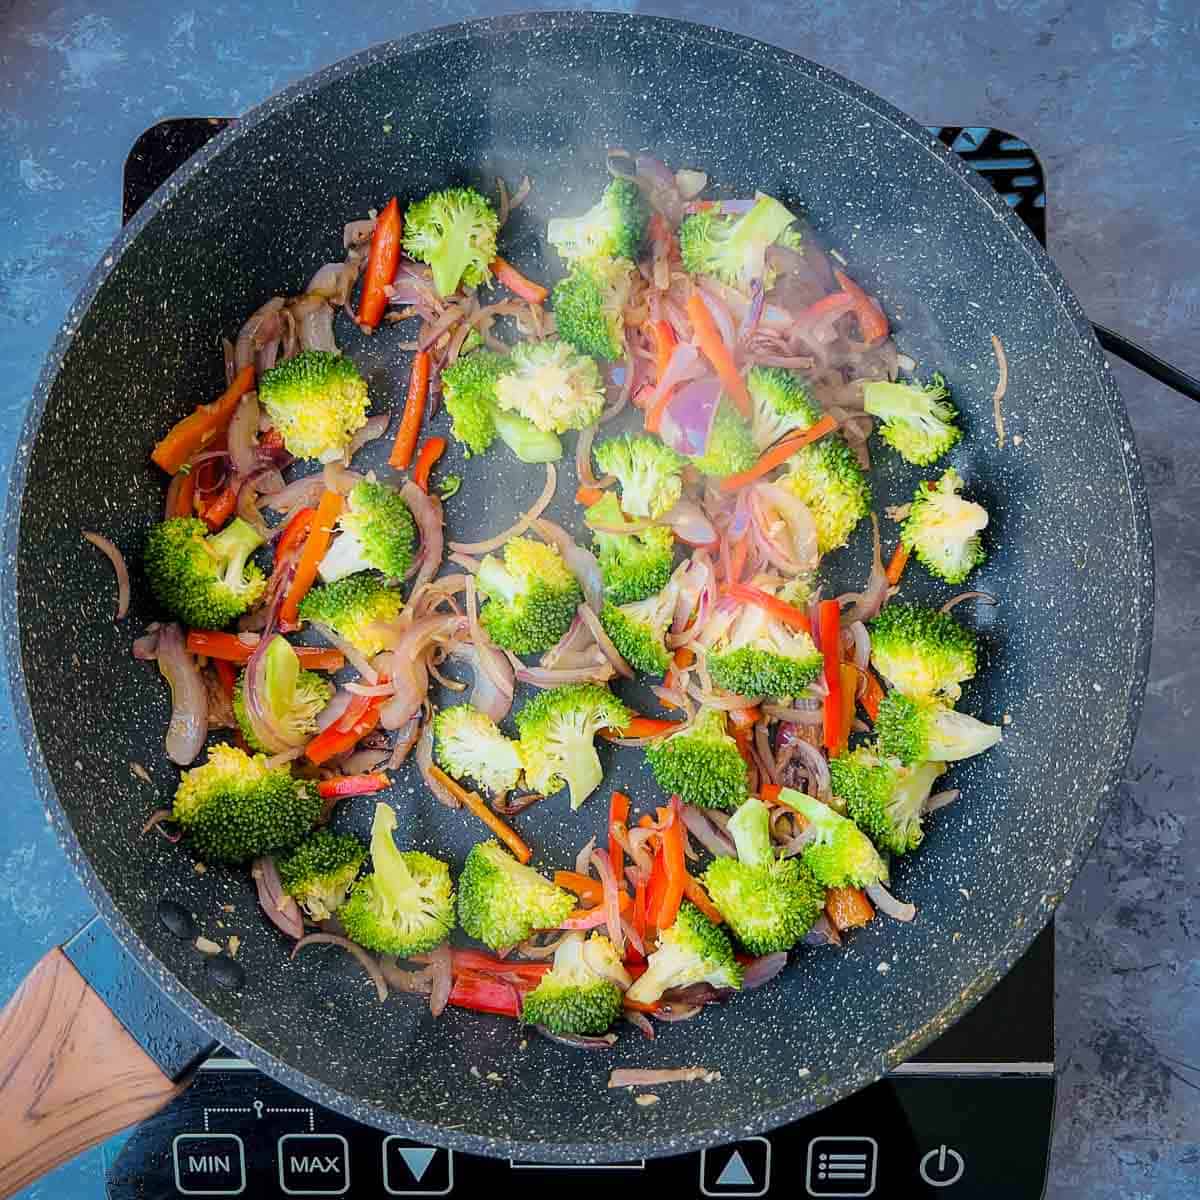 Sauted veggies in frying pan.